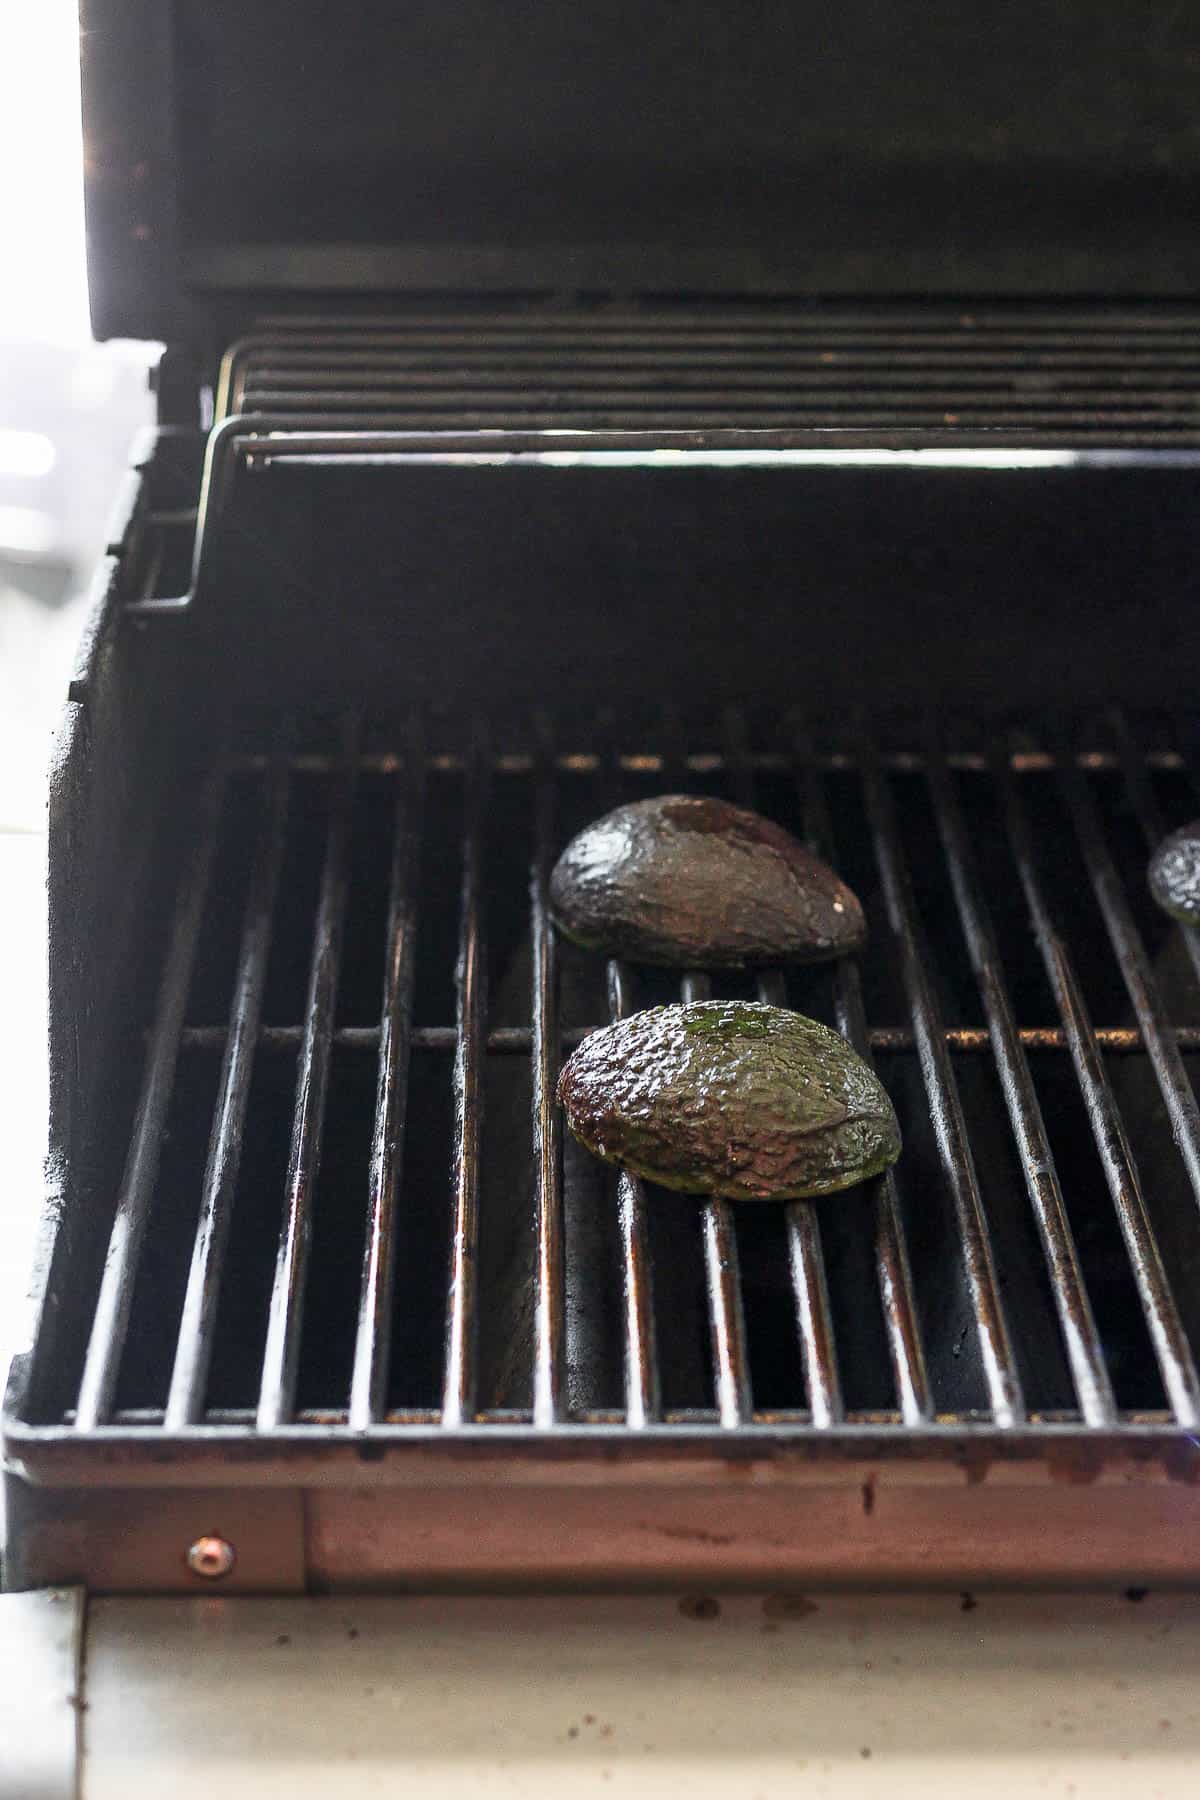 Avocado halves on a grill, cut side down.